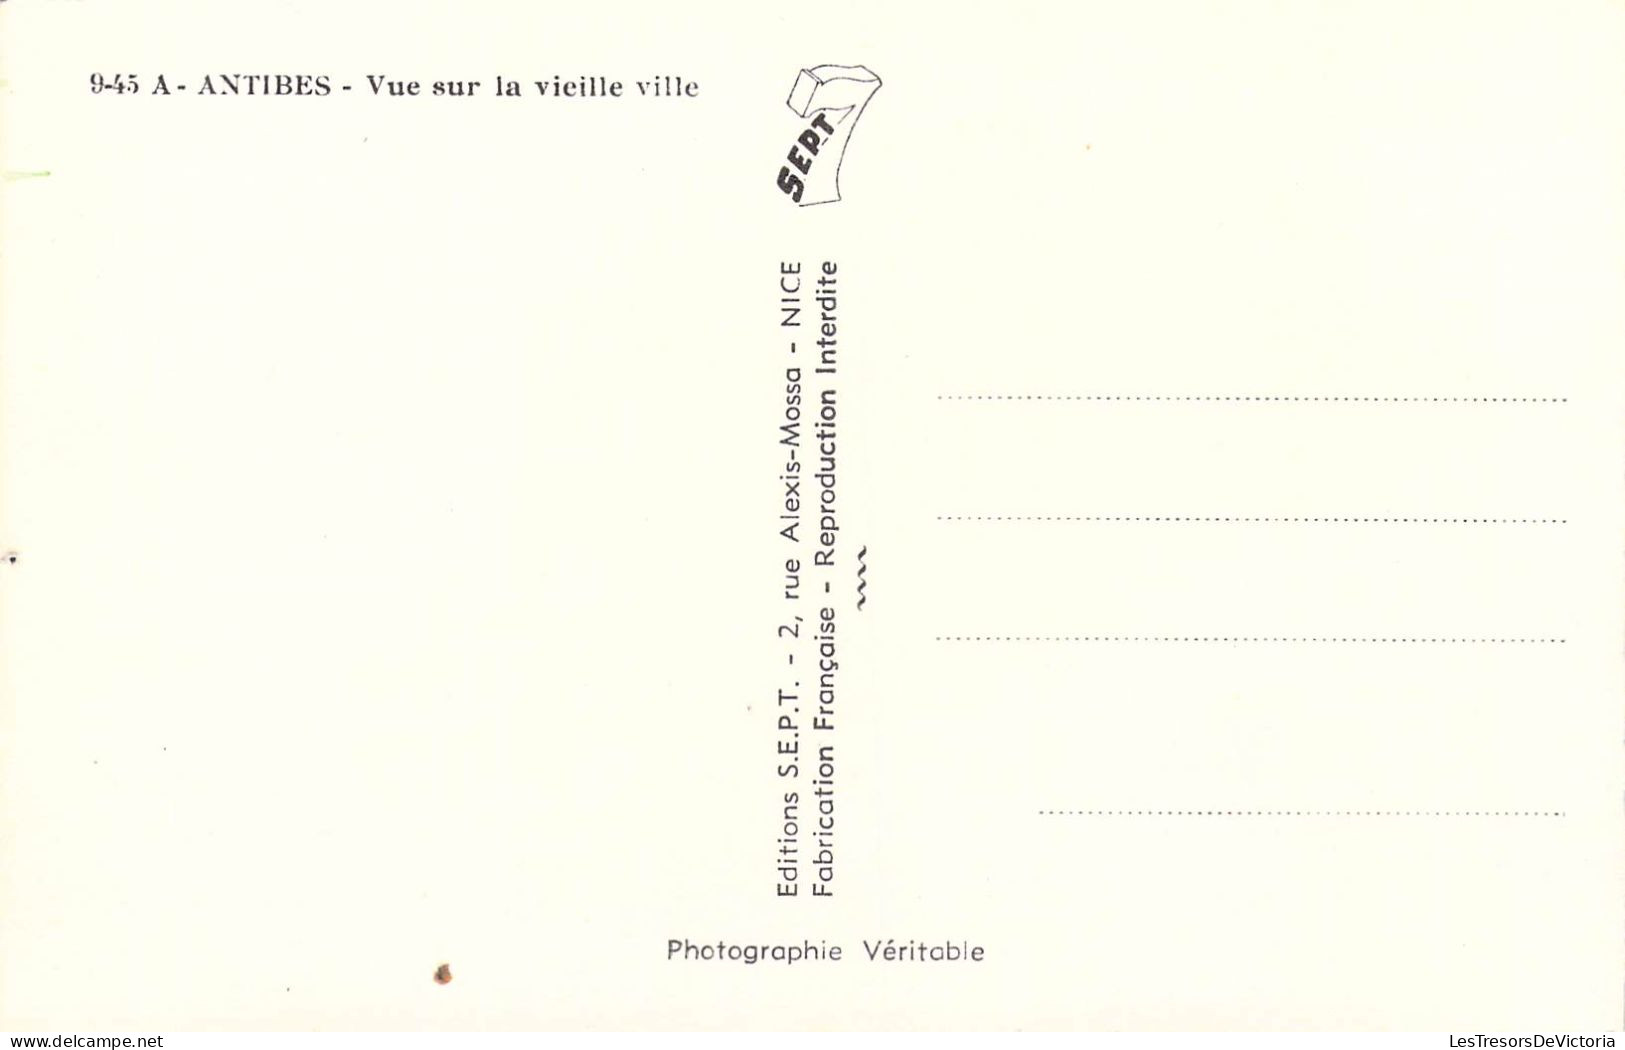 FRANCE - 06 - ANTIBES - Vue Sur La Vieille Ville - Editions SEPT - Carte Postale Ancienne - Antibes - Old Town